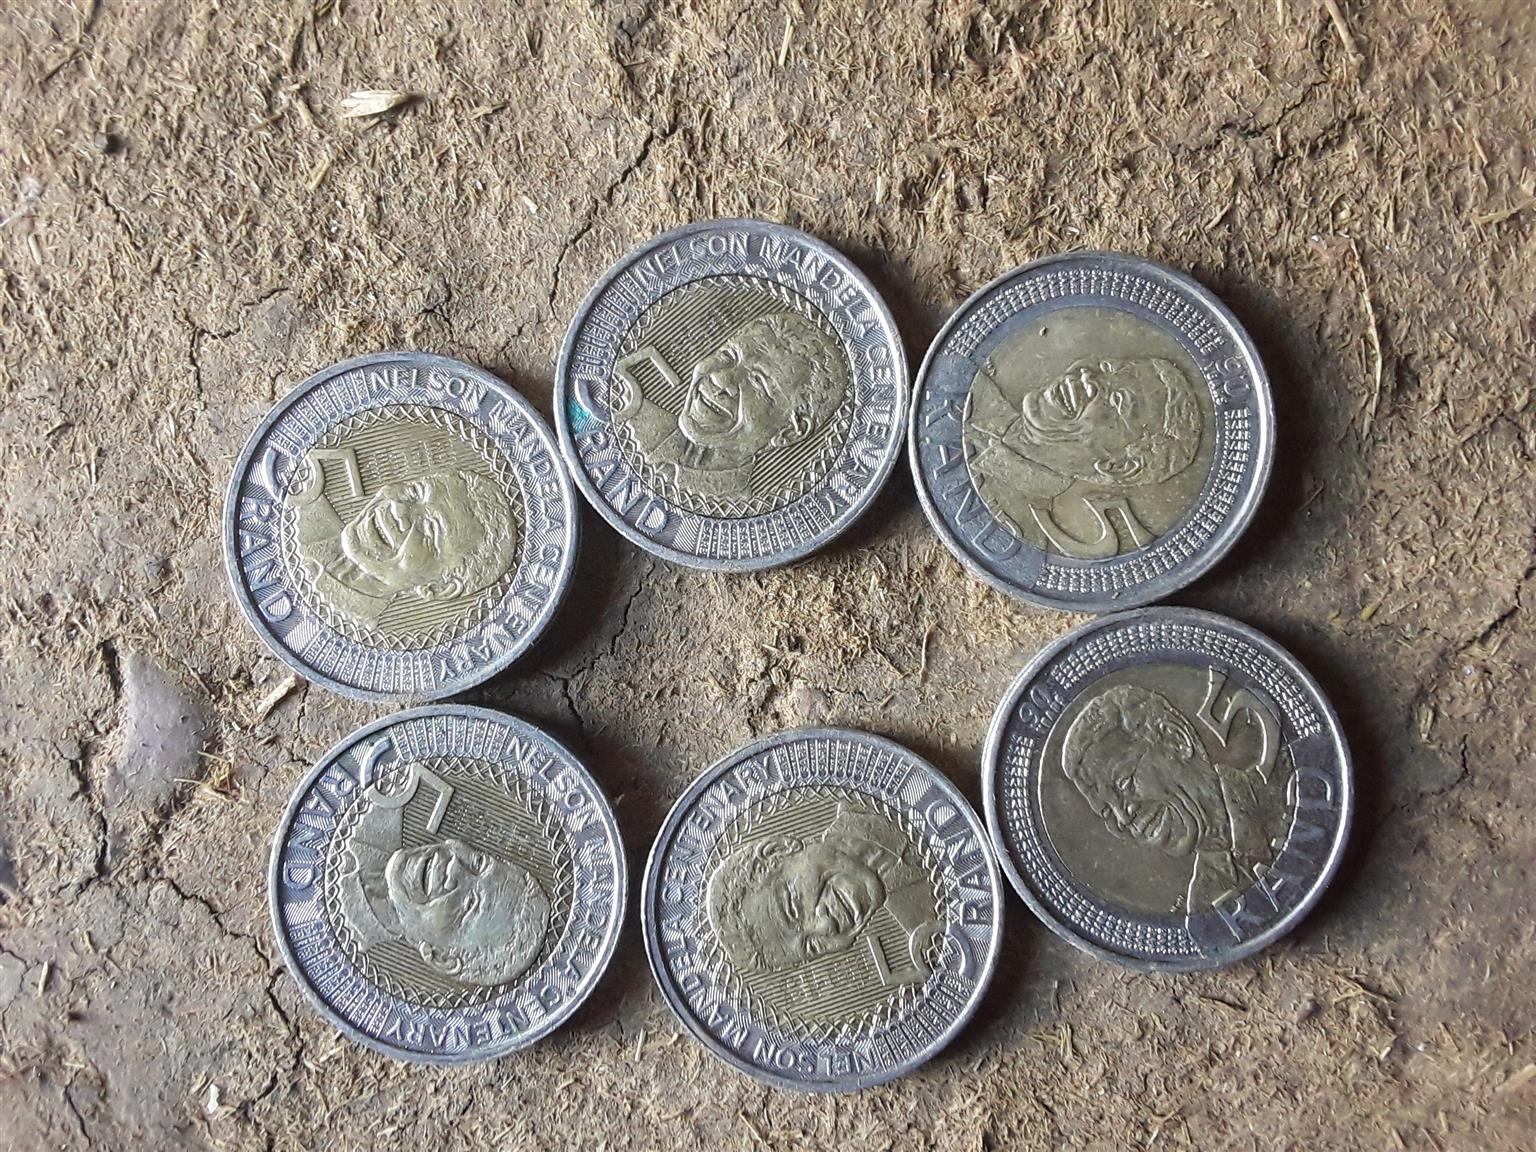 Mandela coins available 